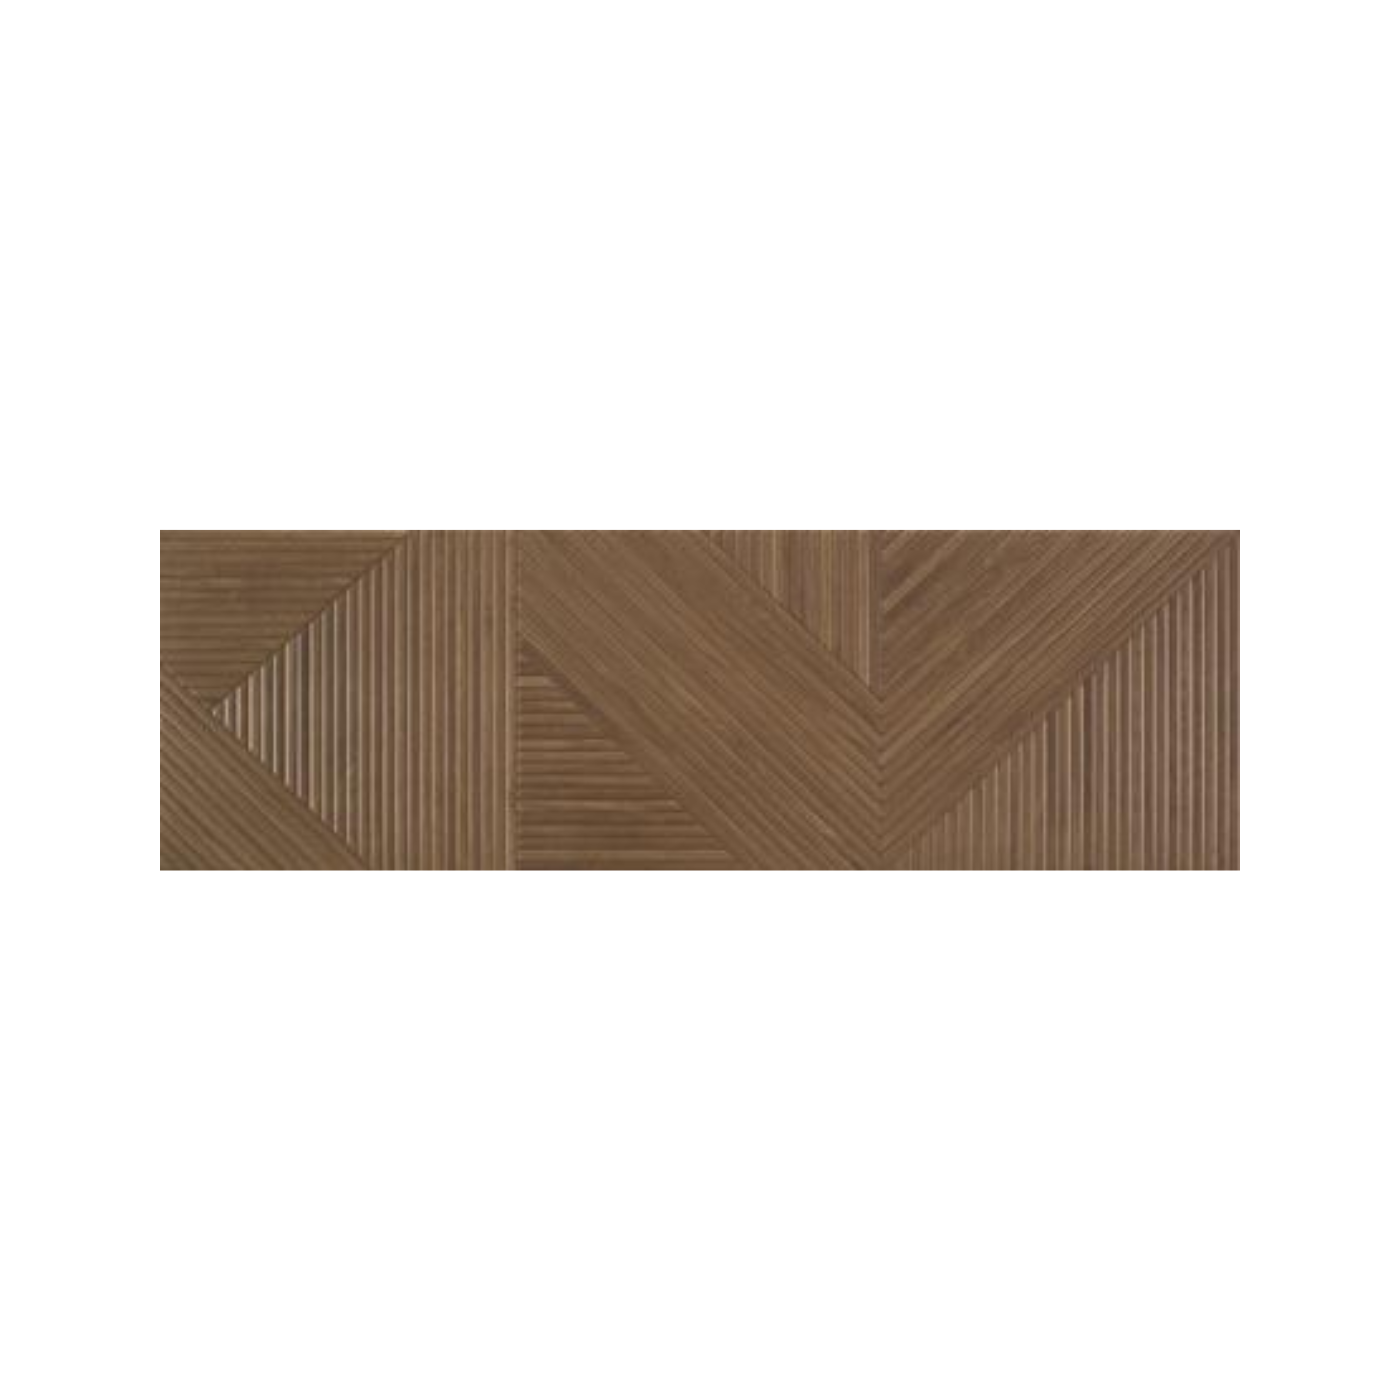 Colorker Tangram wandtegel 31.6x100 Coffee mat